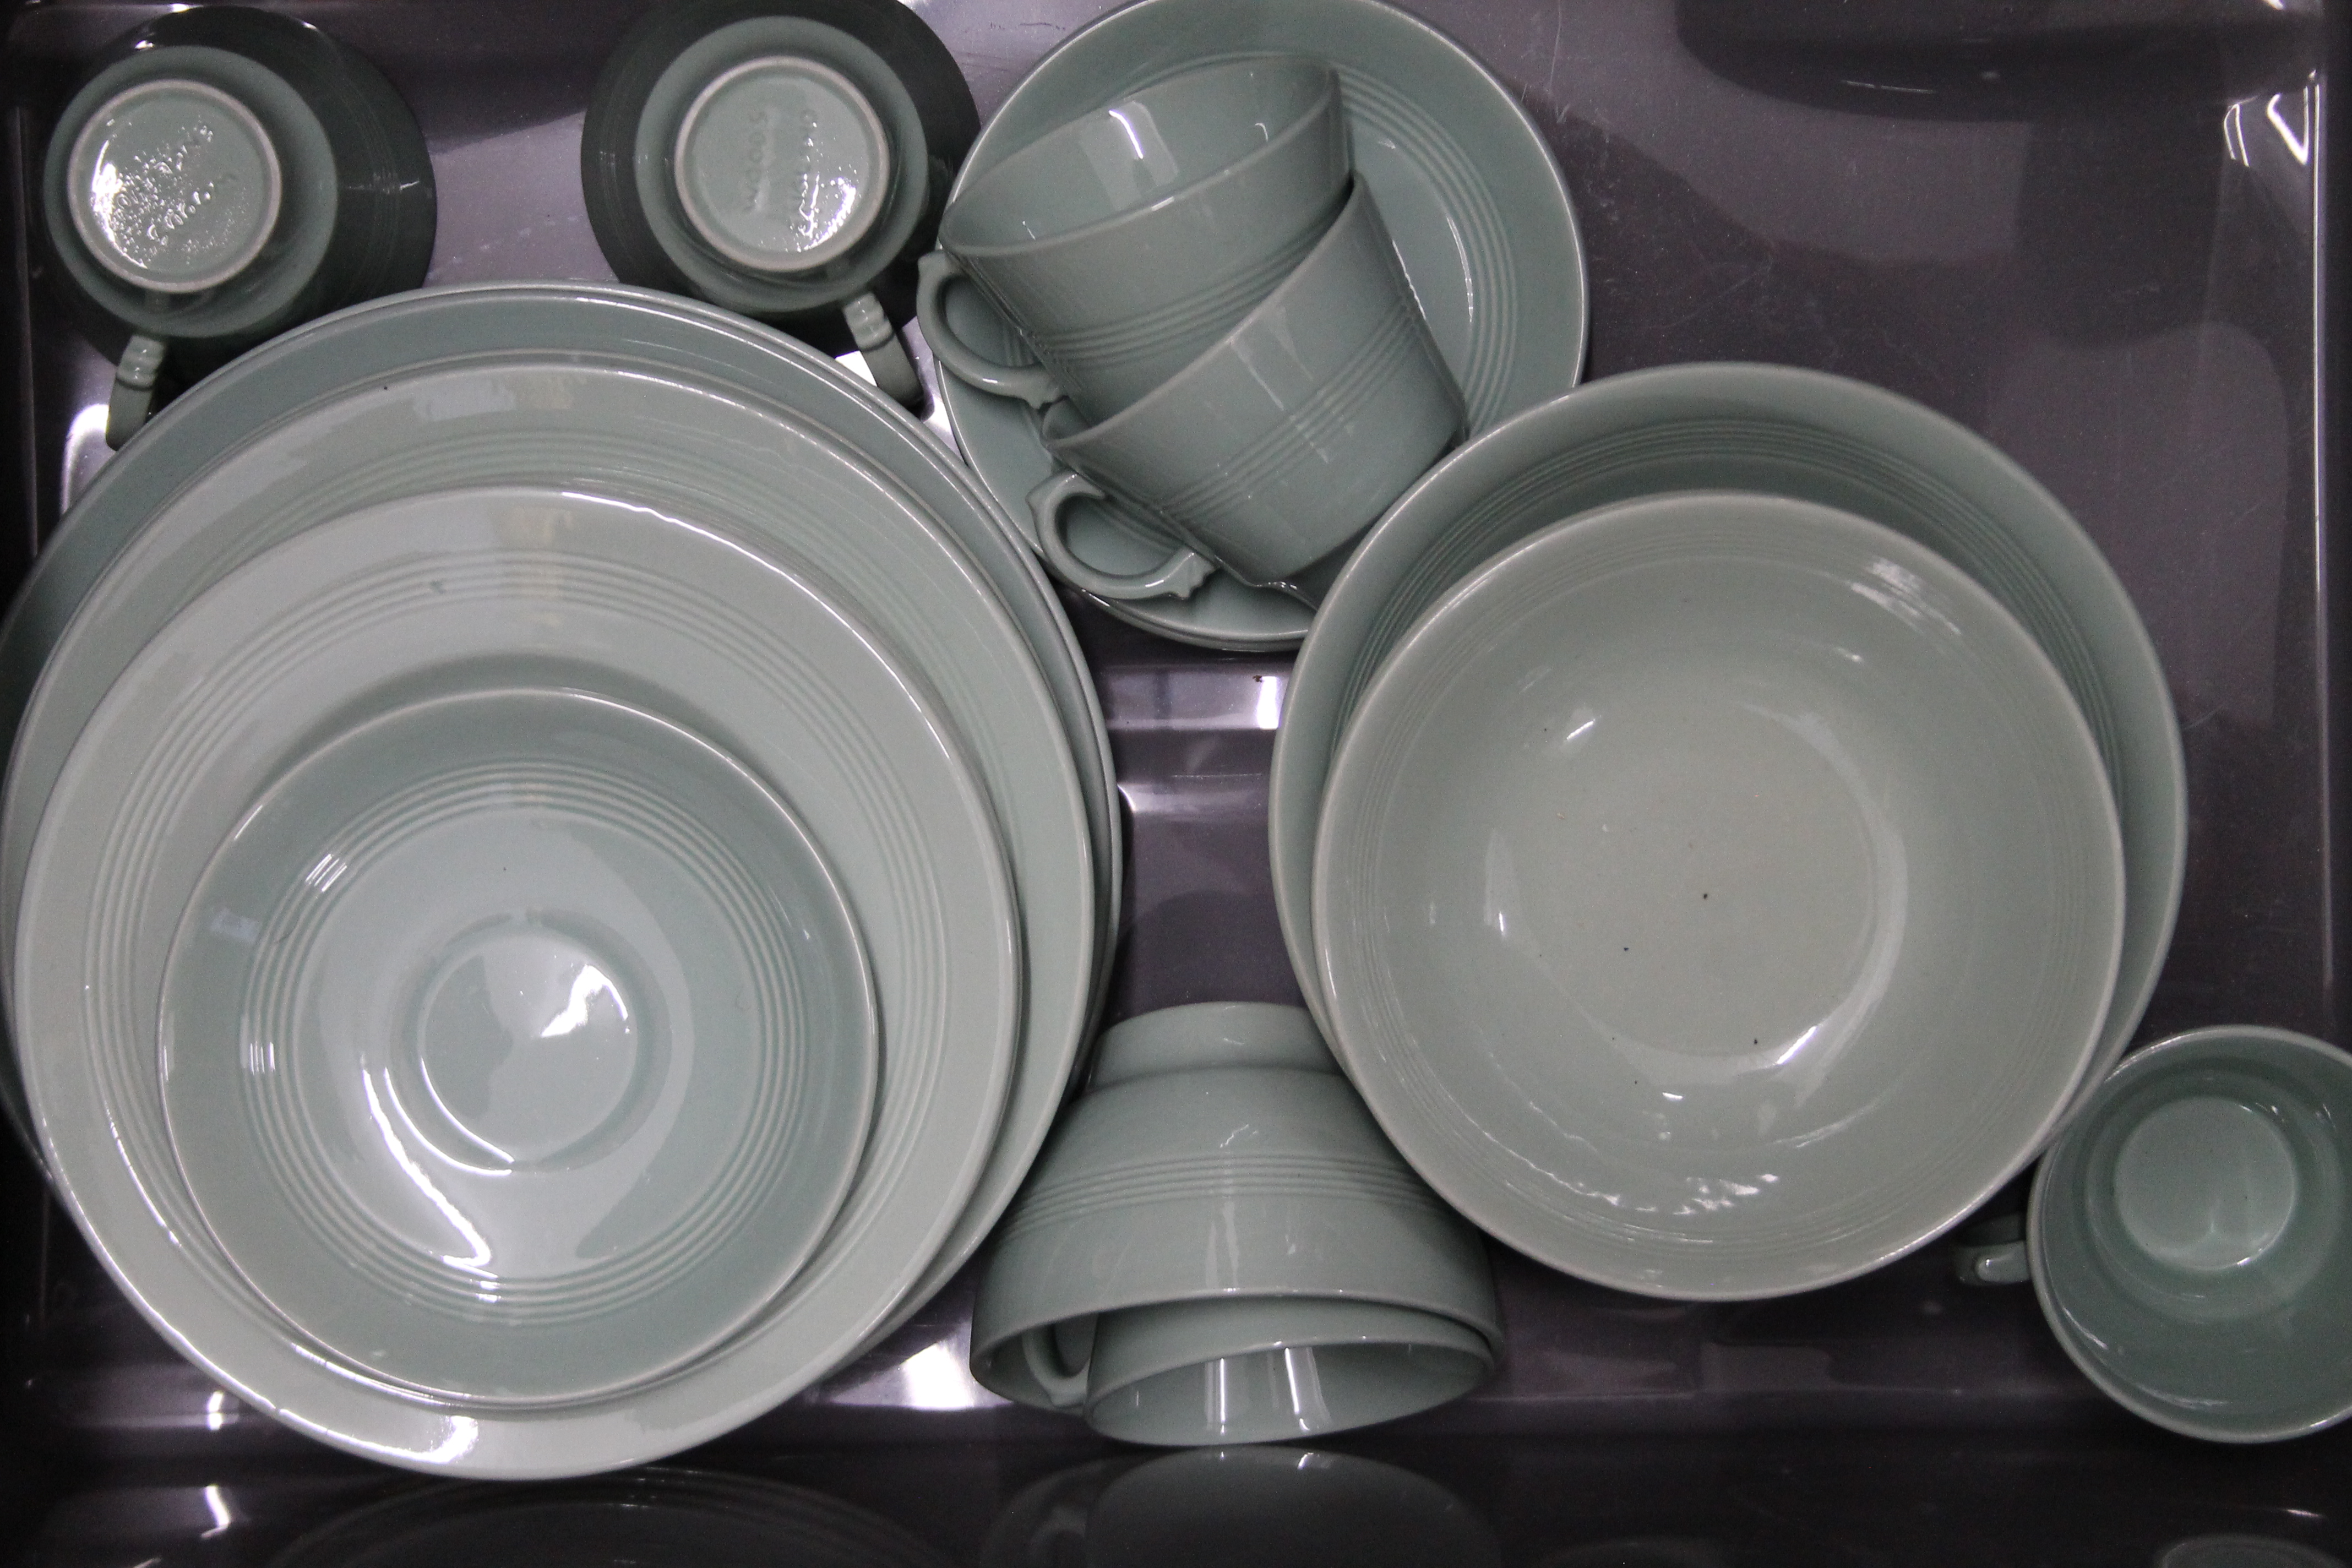 A quantity of Beryl porcelain teawares.